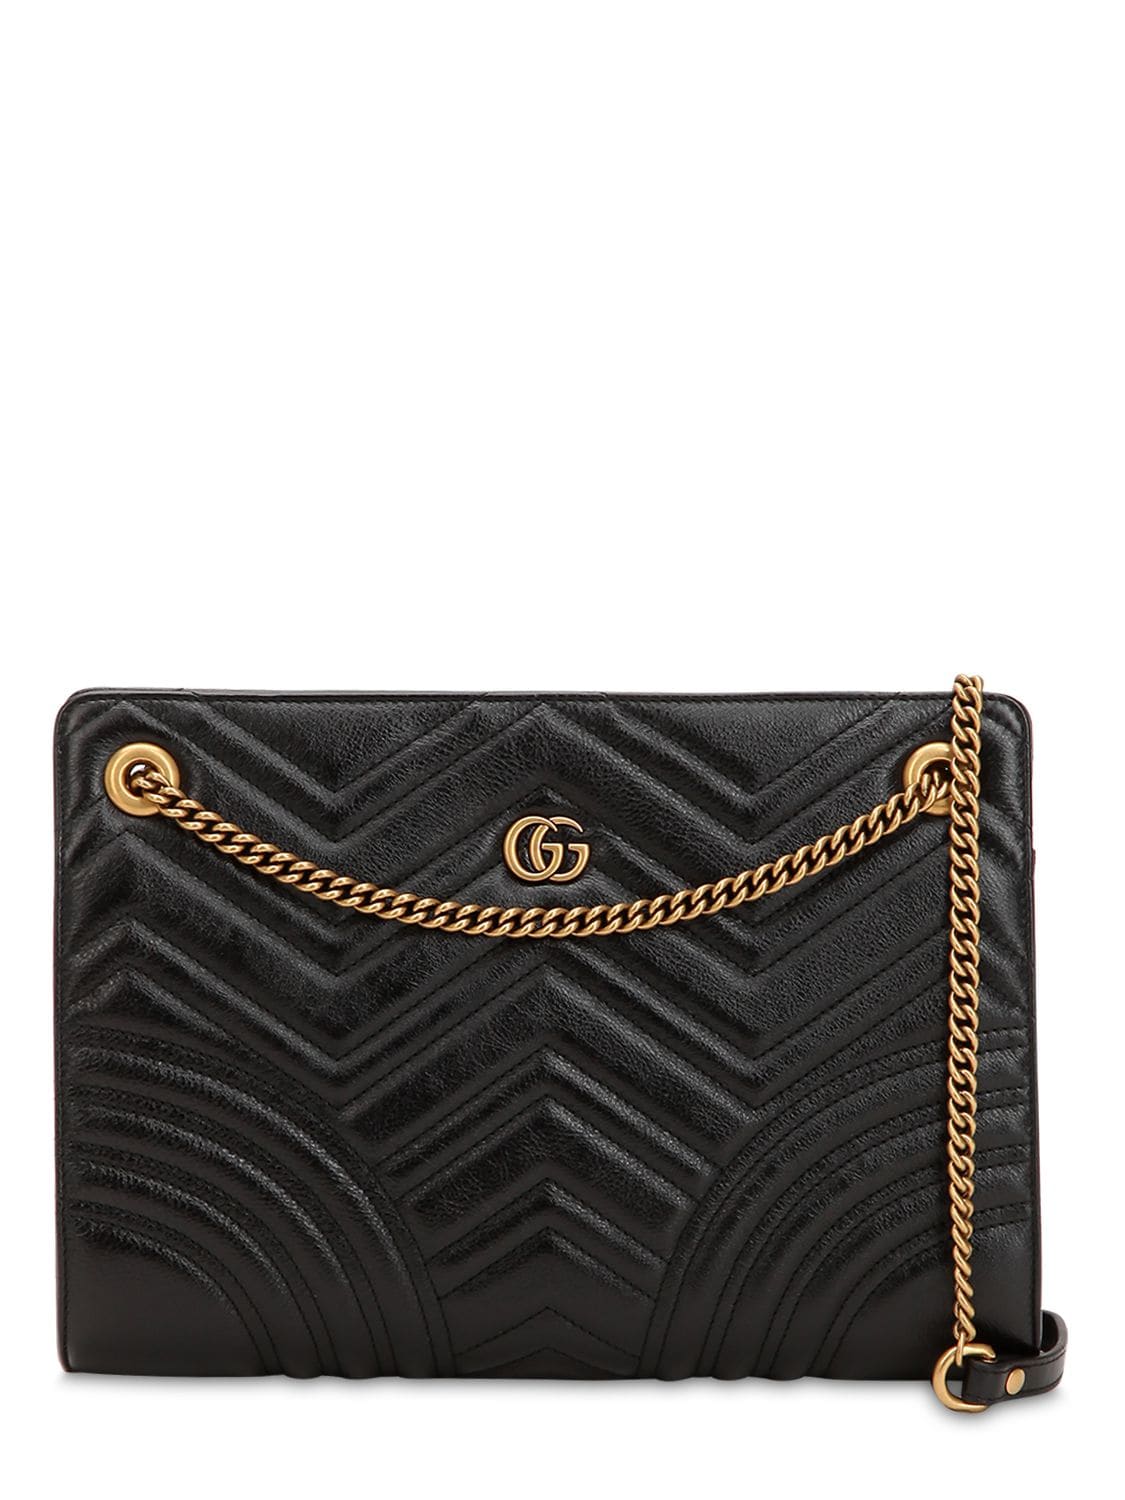 Gucci Gg Marmont Leather Shoulder Bag In Black